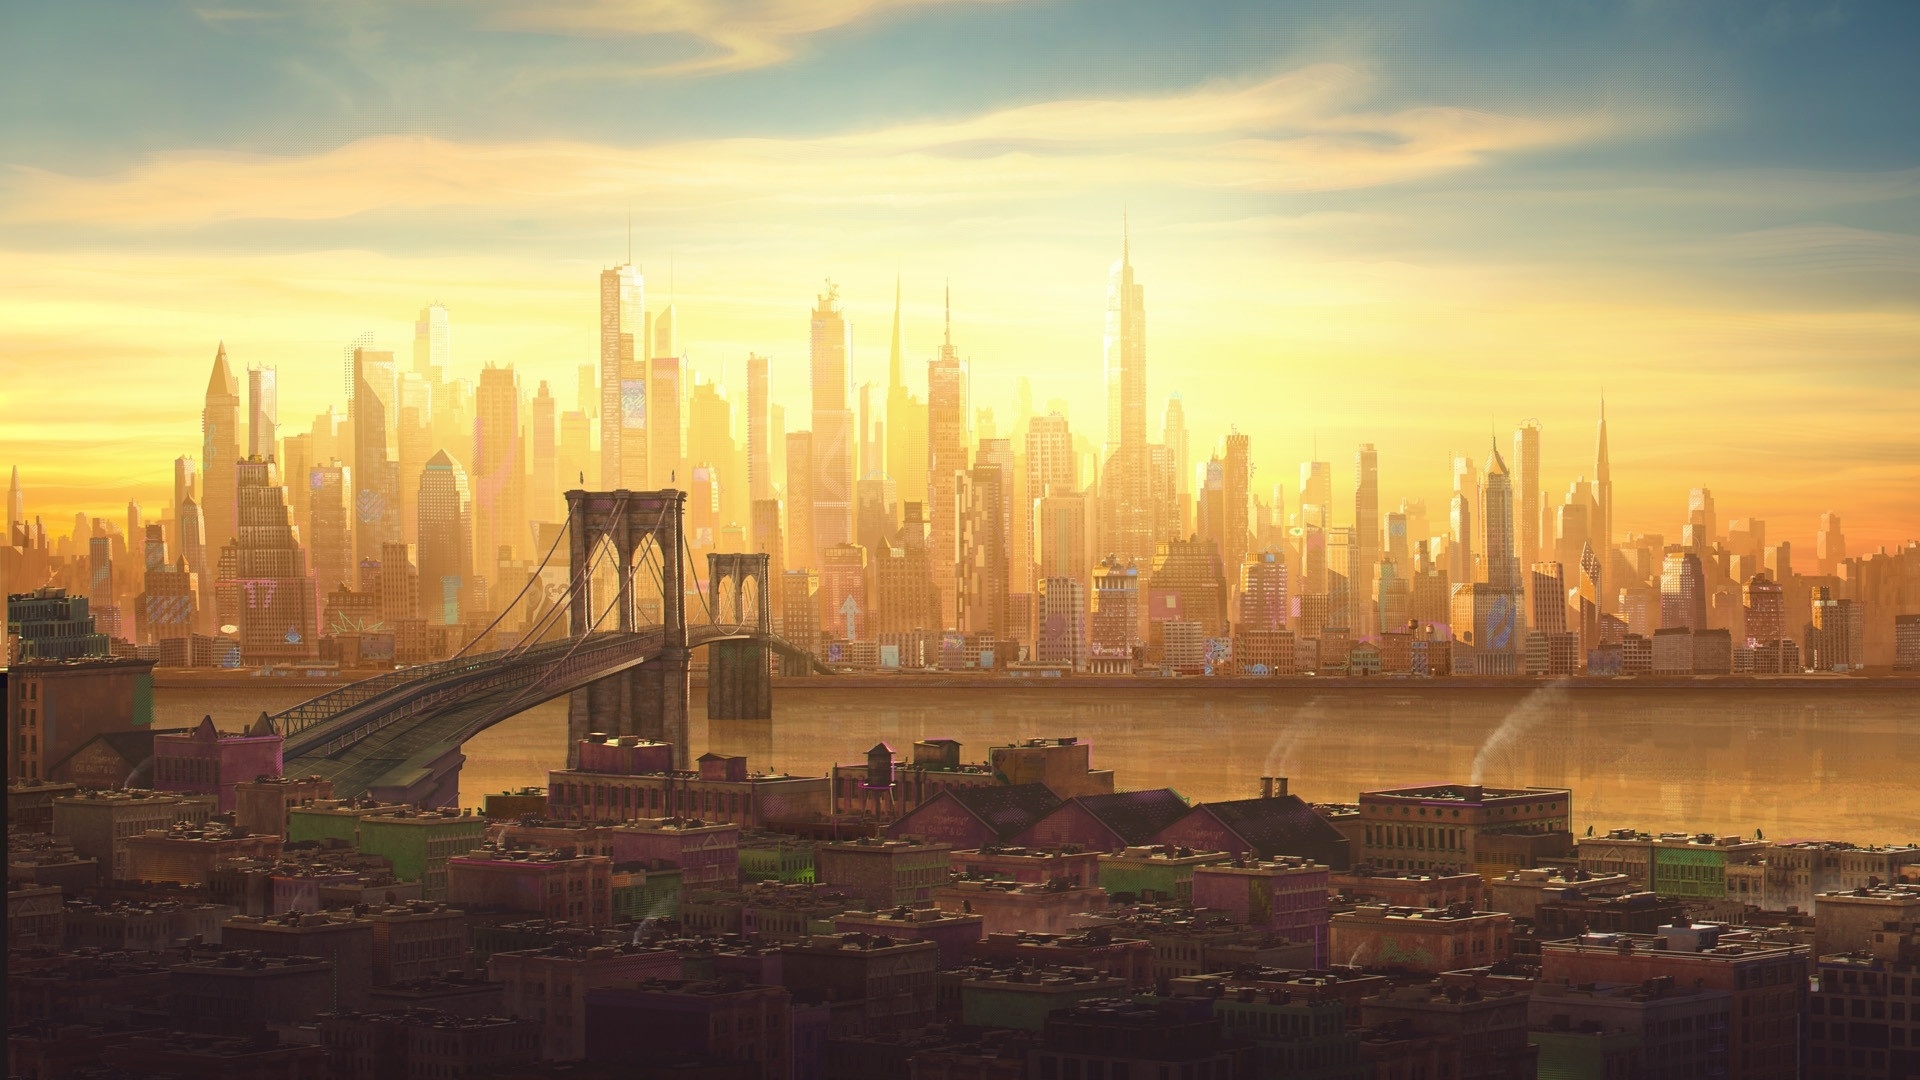 General 1920x1080 Spider-Man: Into the Spider-Verse cityscape architecture movies skyline New York City Brooklyn Bridge sunlight sky